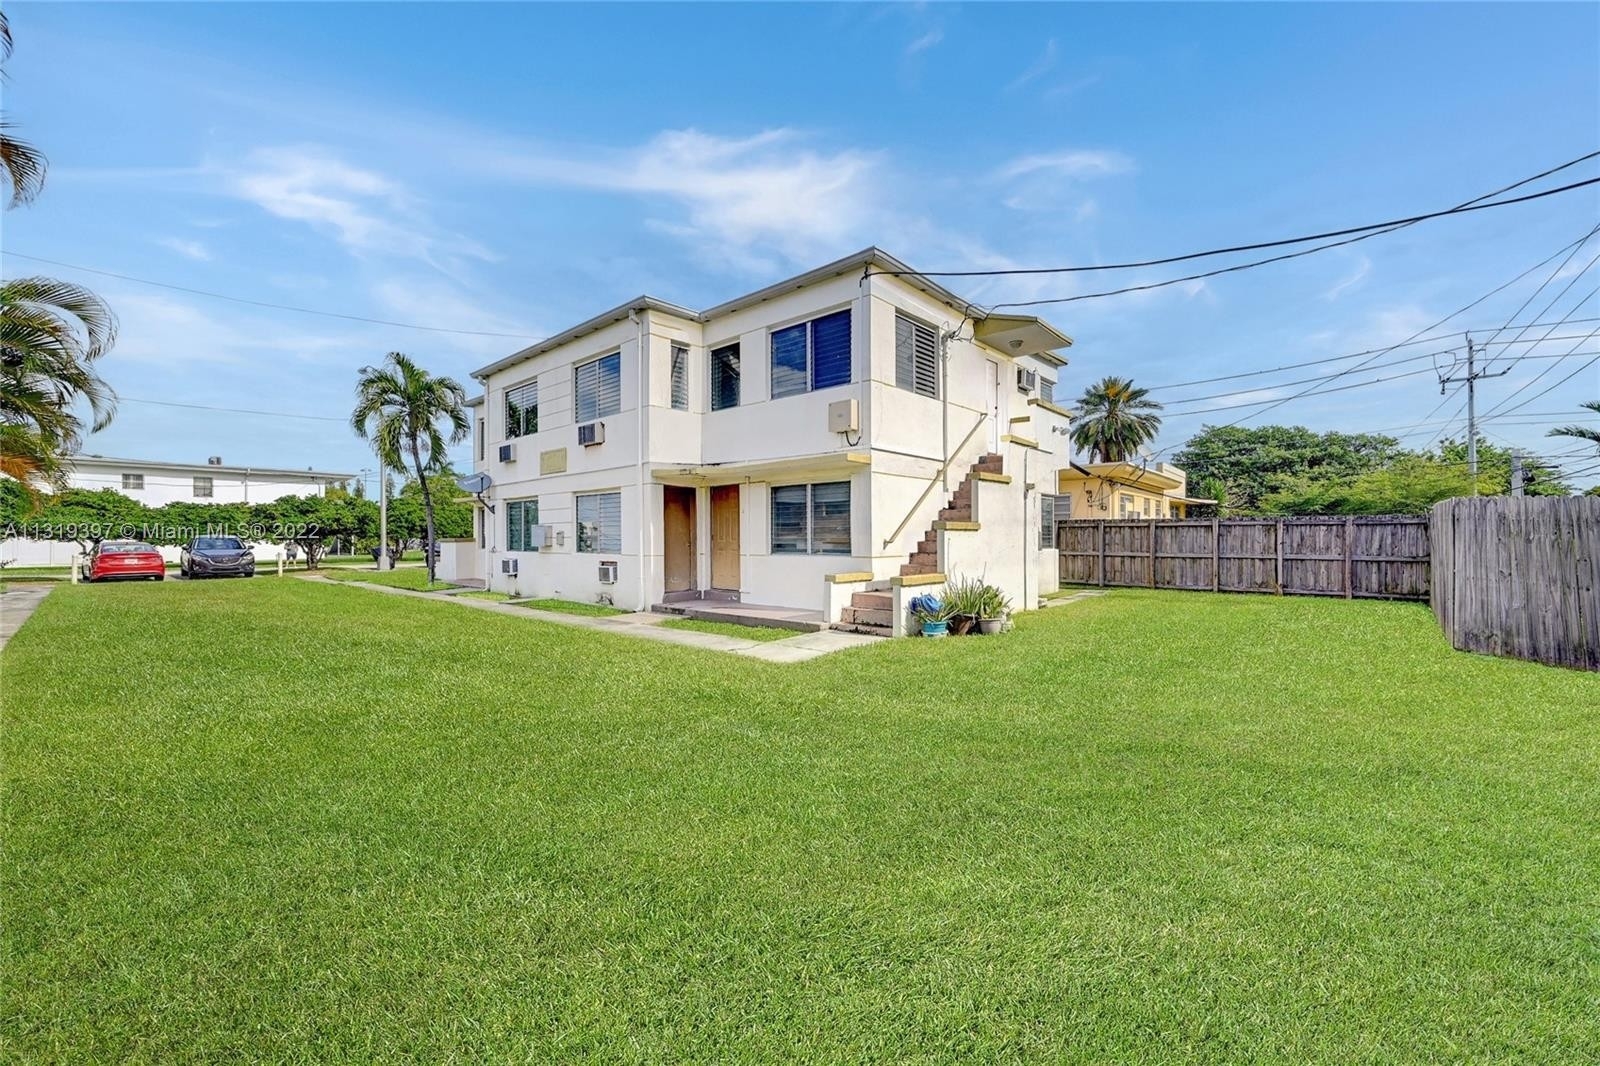 14. Multi Family Townhouse for Sale at Isle of Normandy Miami View, Miami Beach, FL 33141